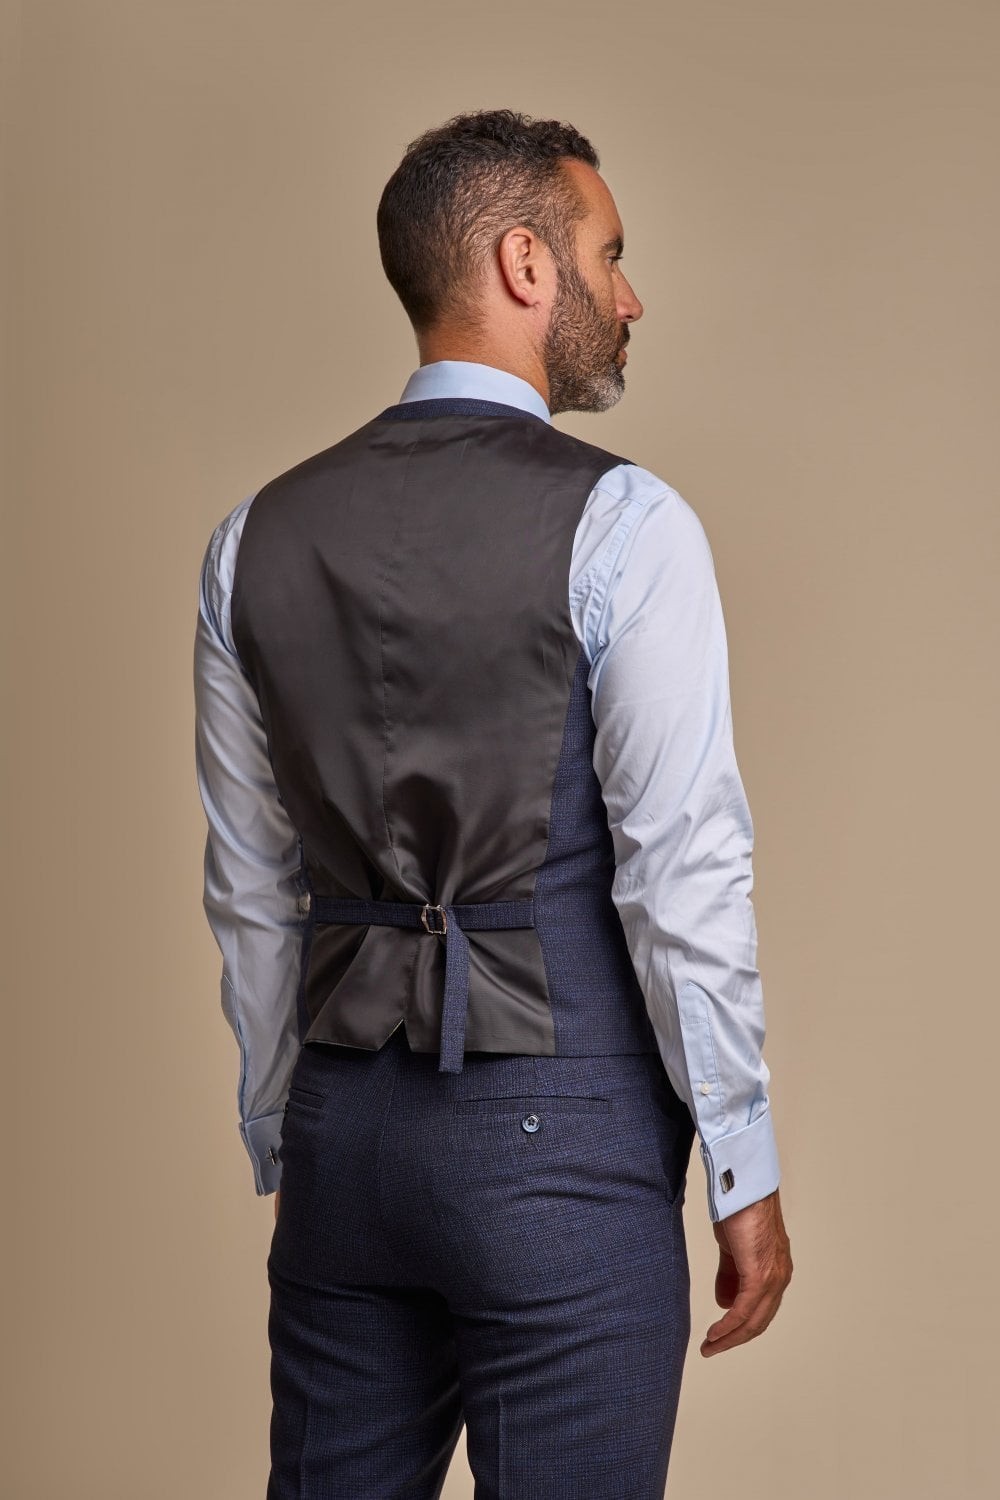 Men's Tweed Houndstooth Check Slim Fit Suit - CARIDI